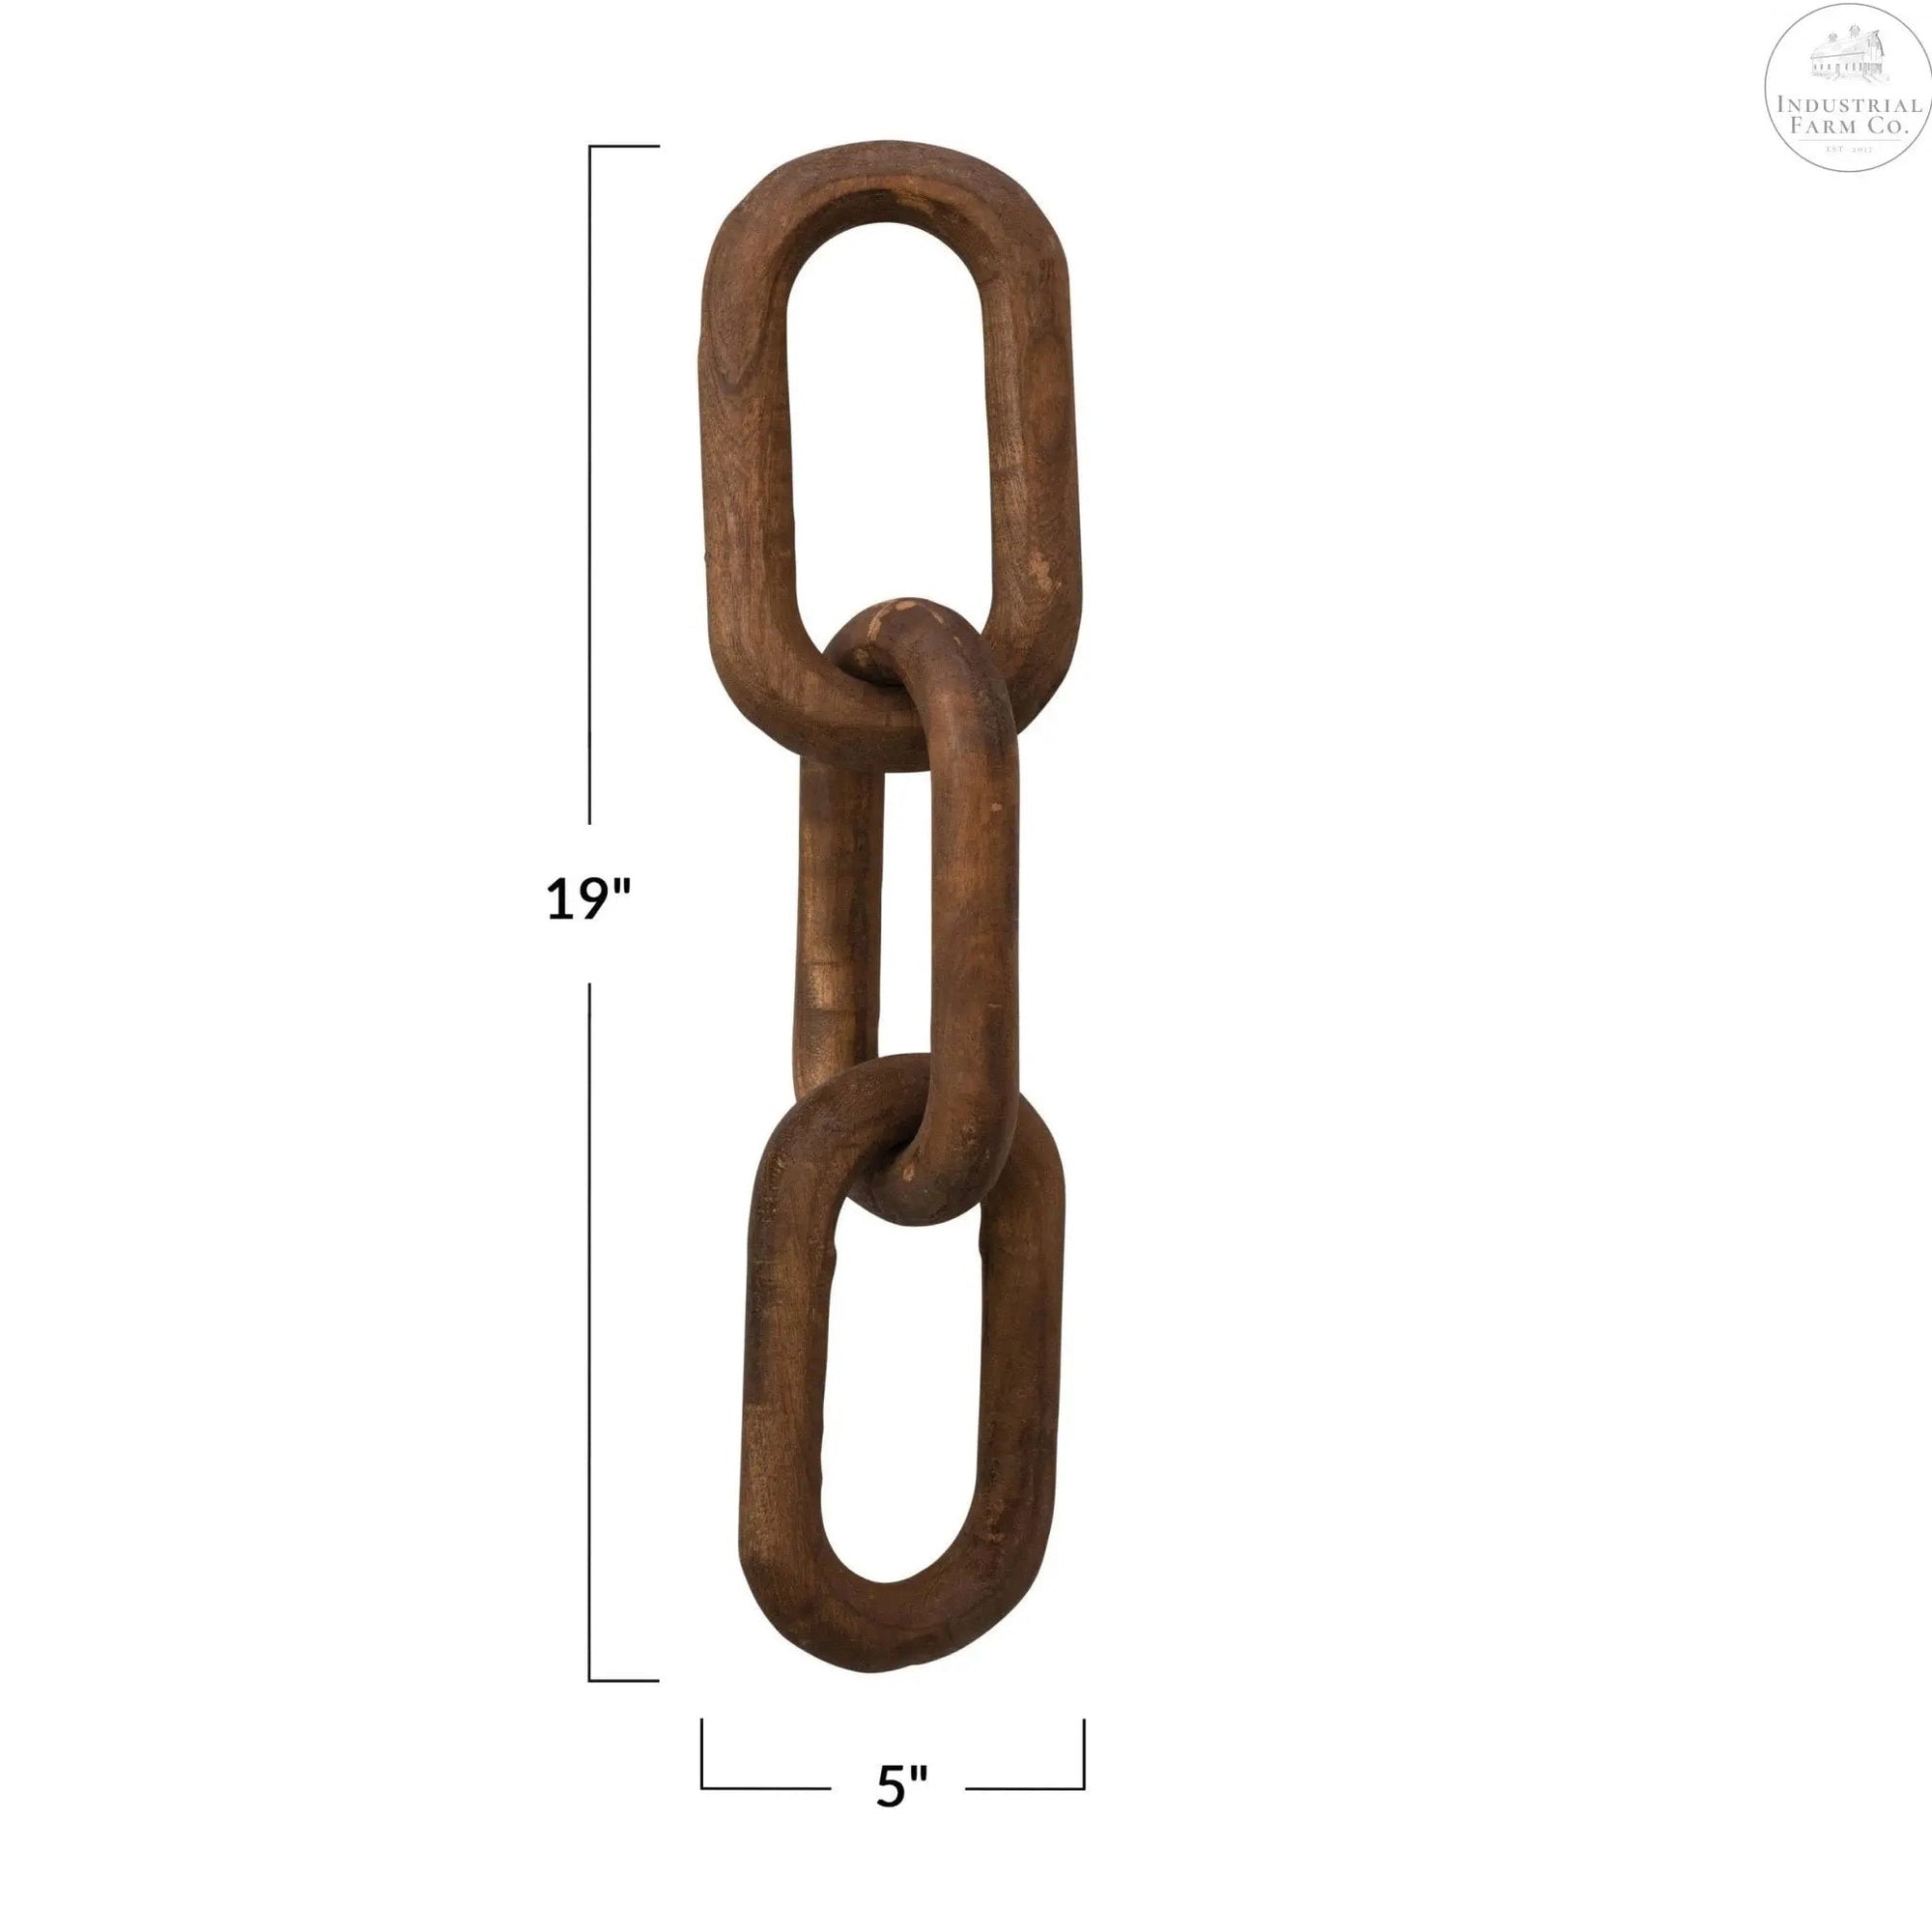 Reclaimed Wood Chain Link     | Industrial Farm Co